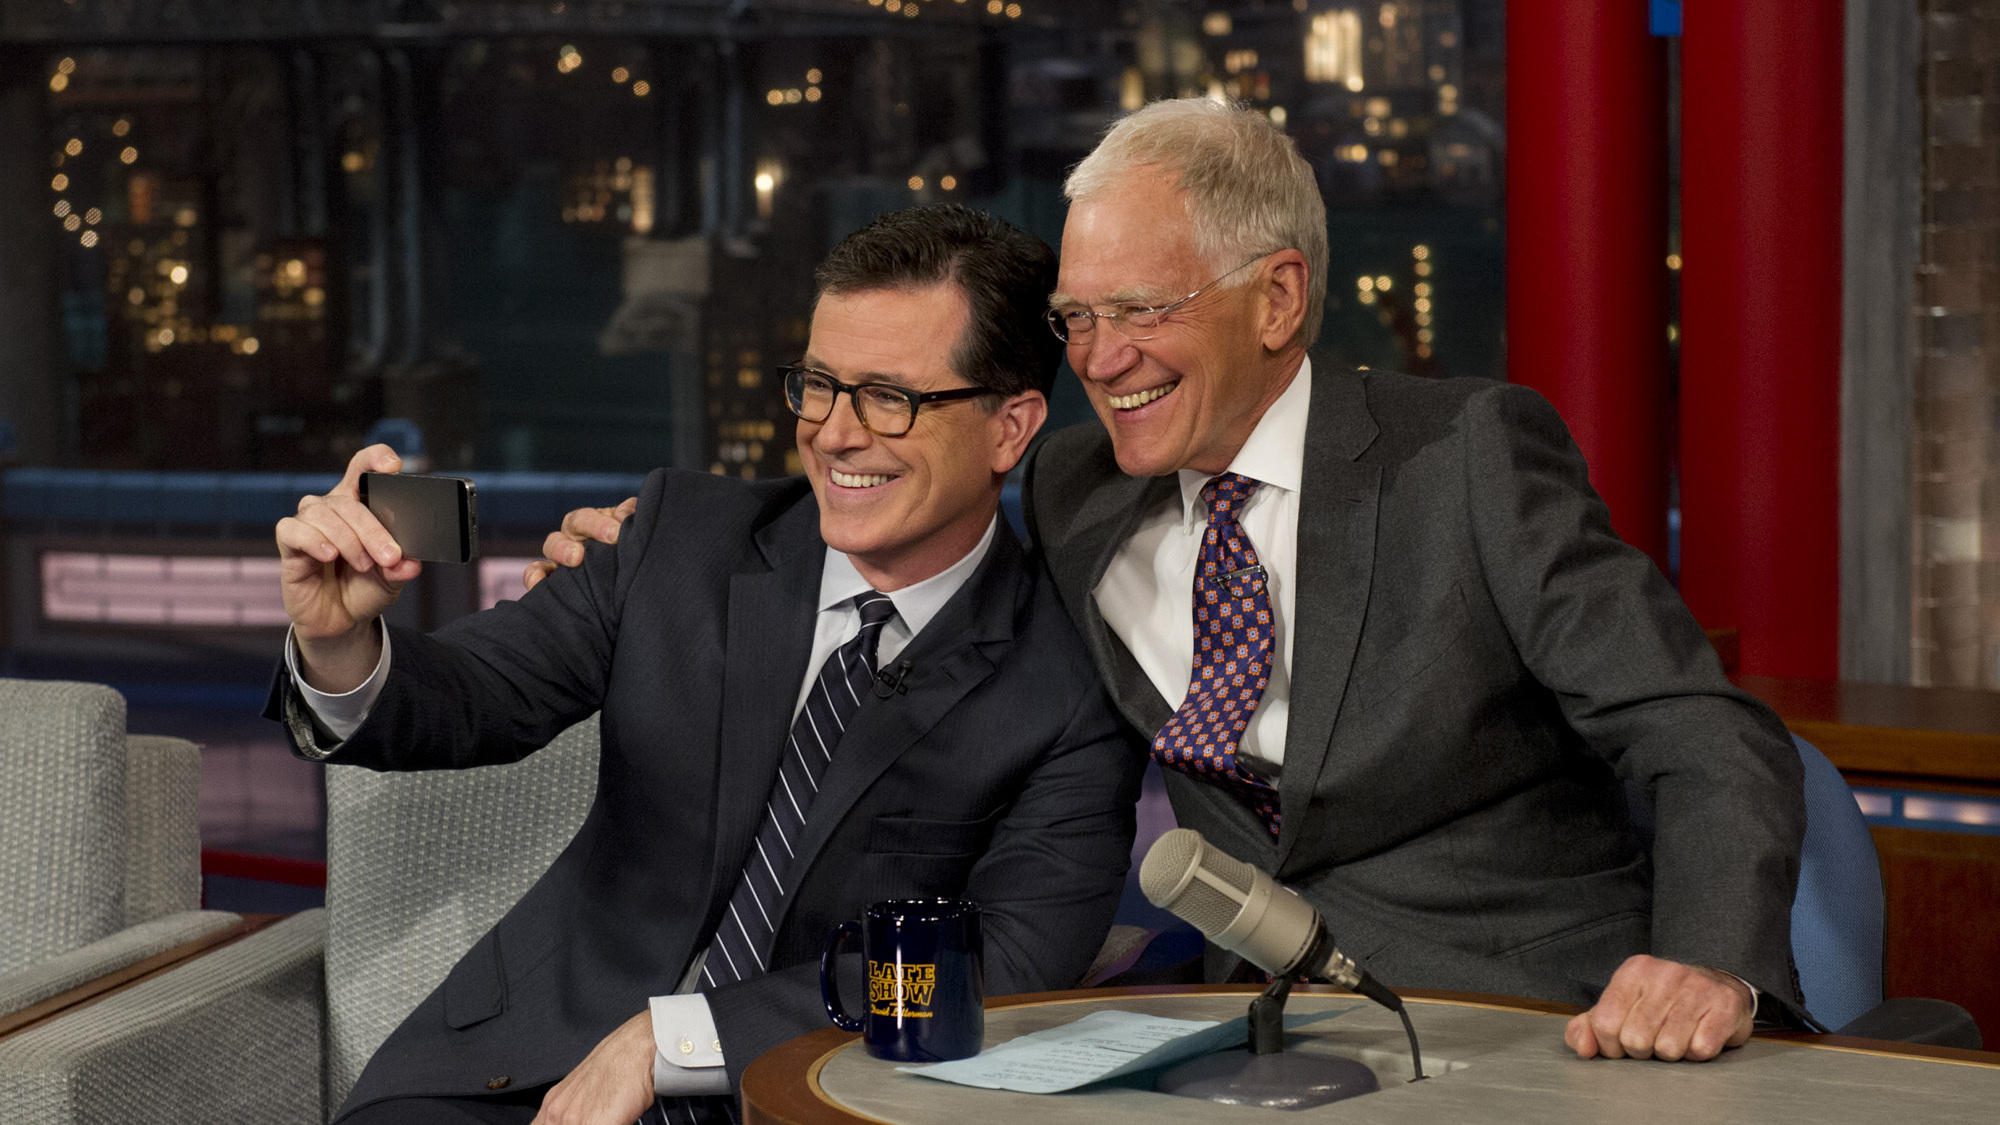 Stephen Colbert selfie with David Letterman